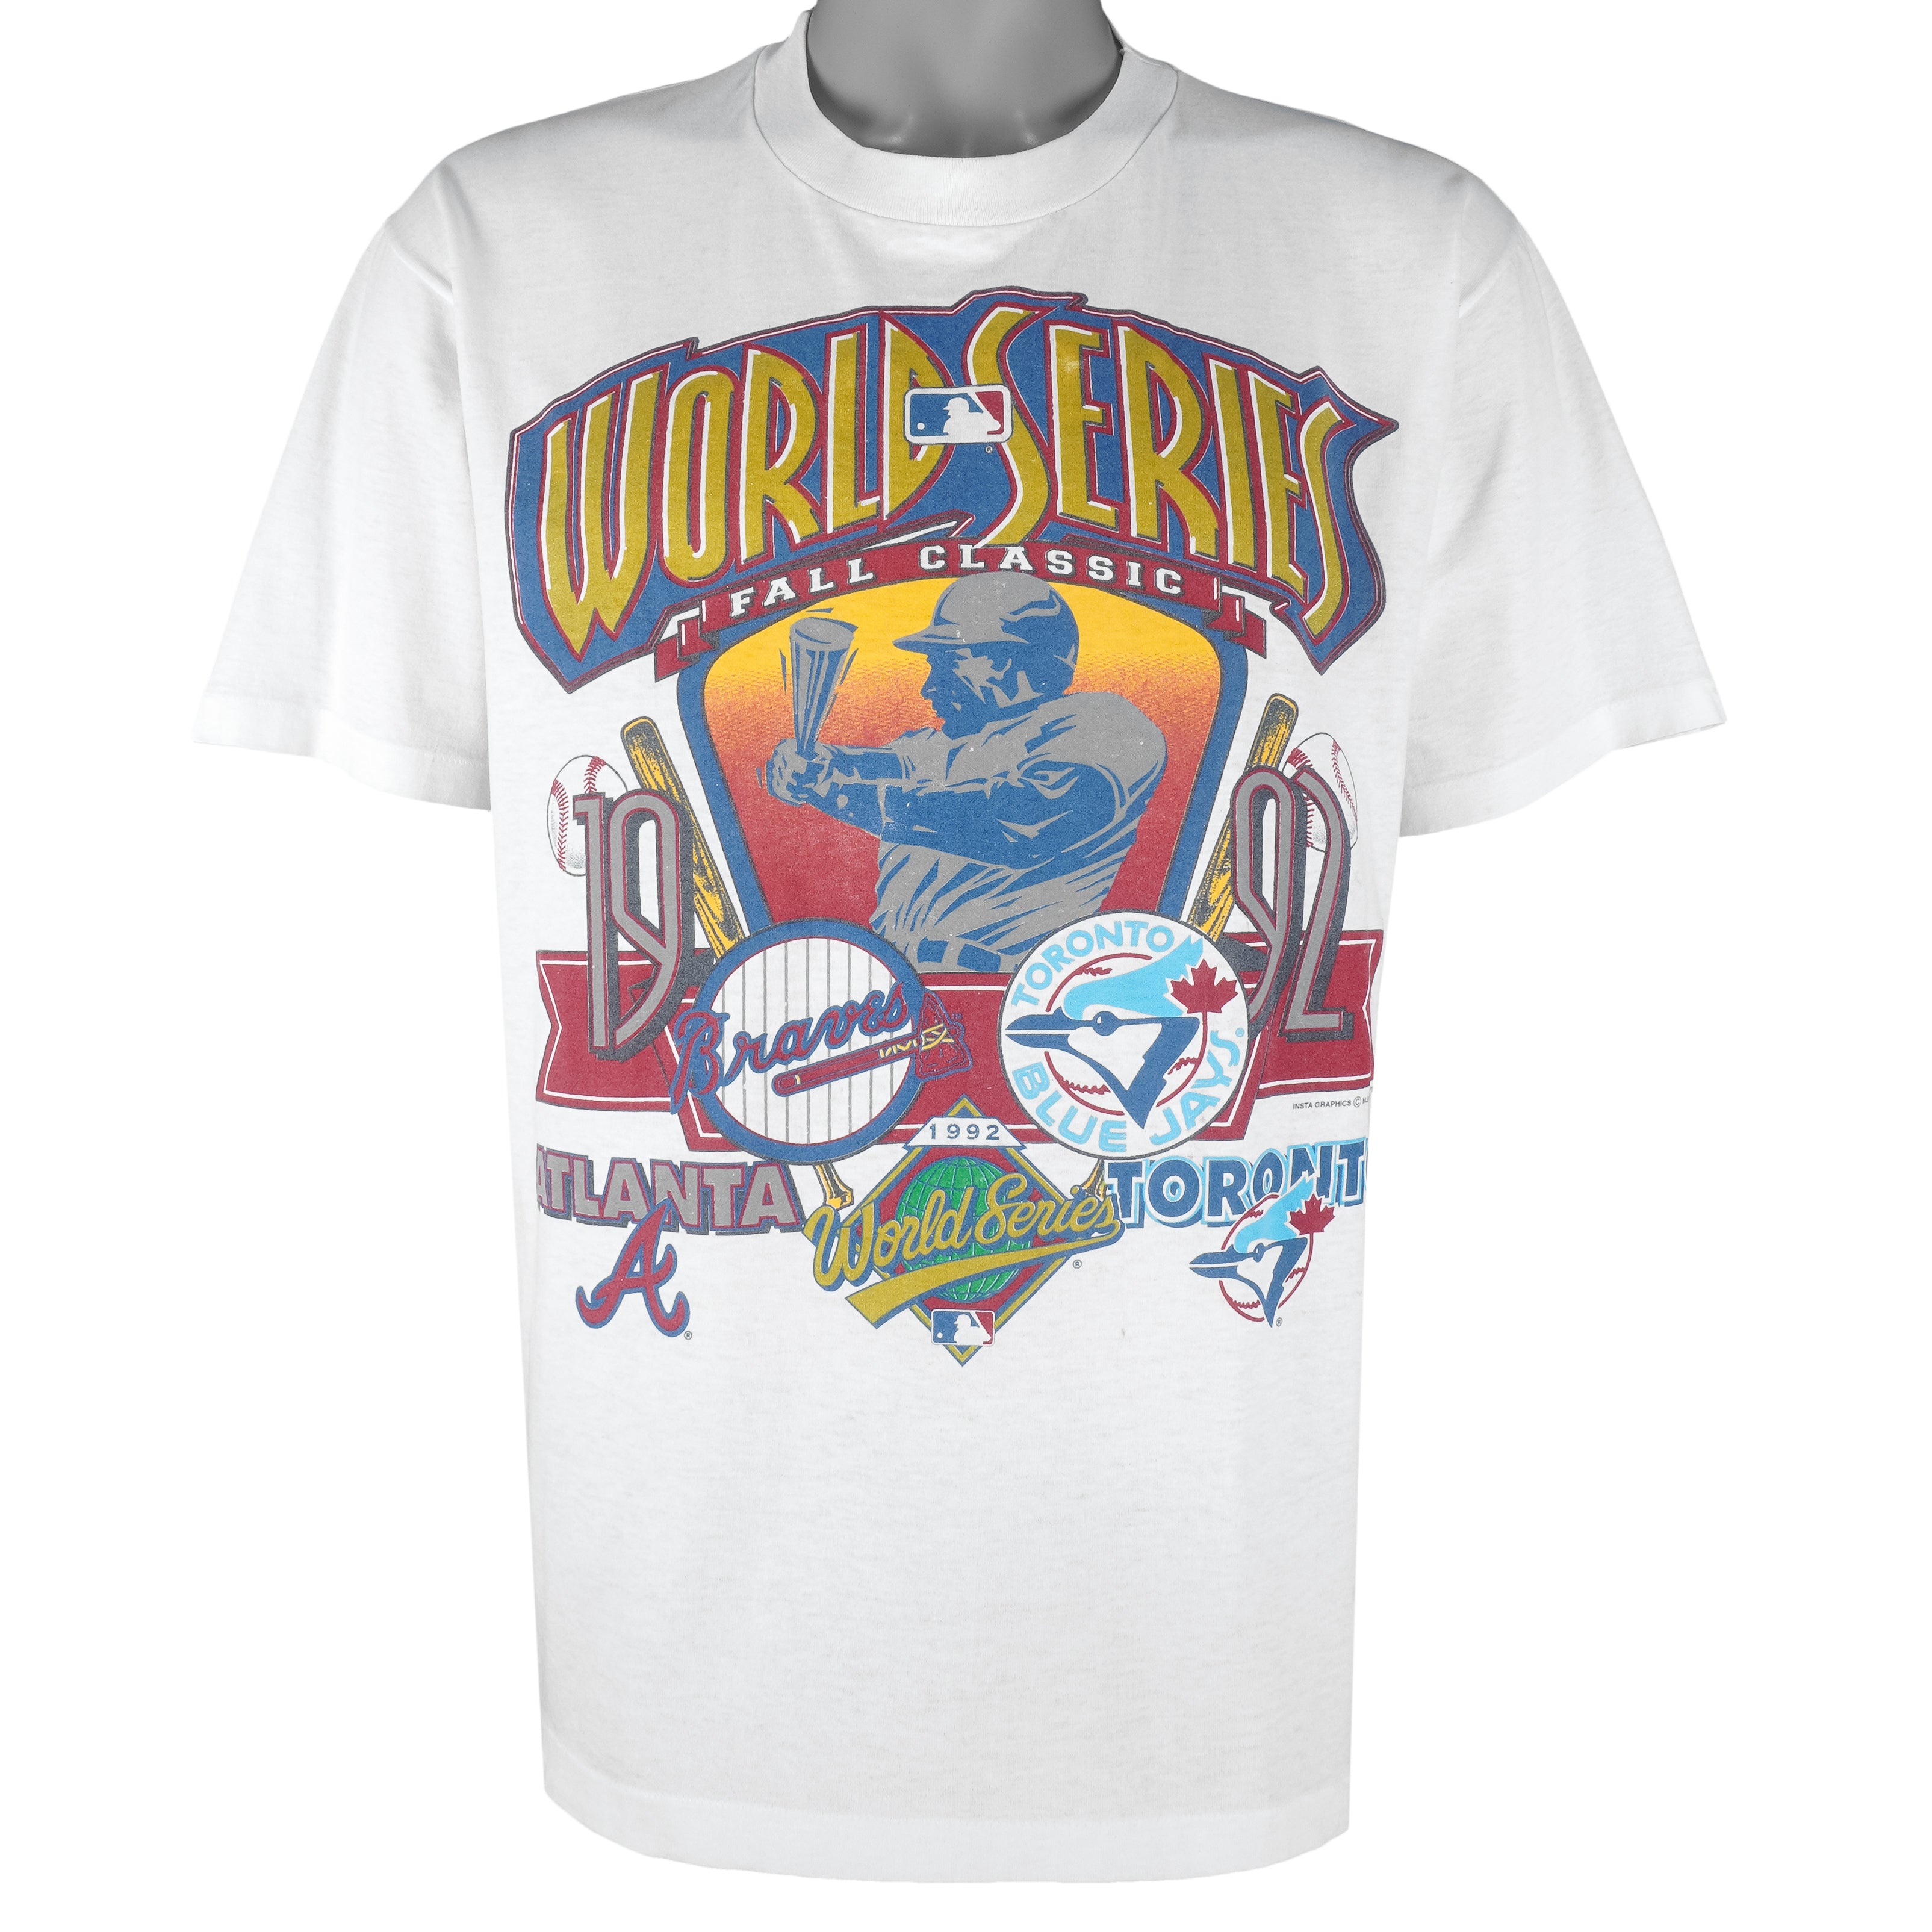 Non Brand Vintage Atlanta Braves 1992 T-Shirt Medium